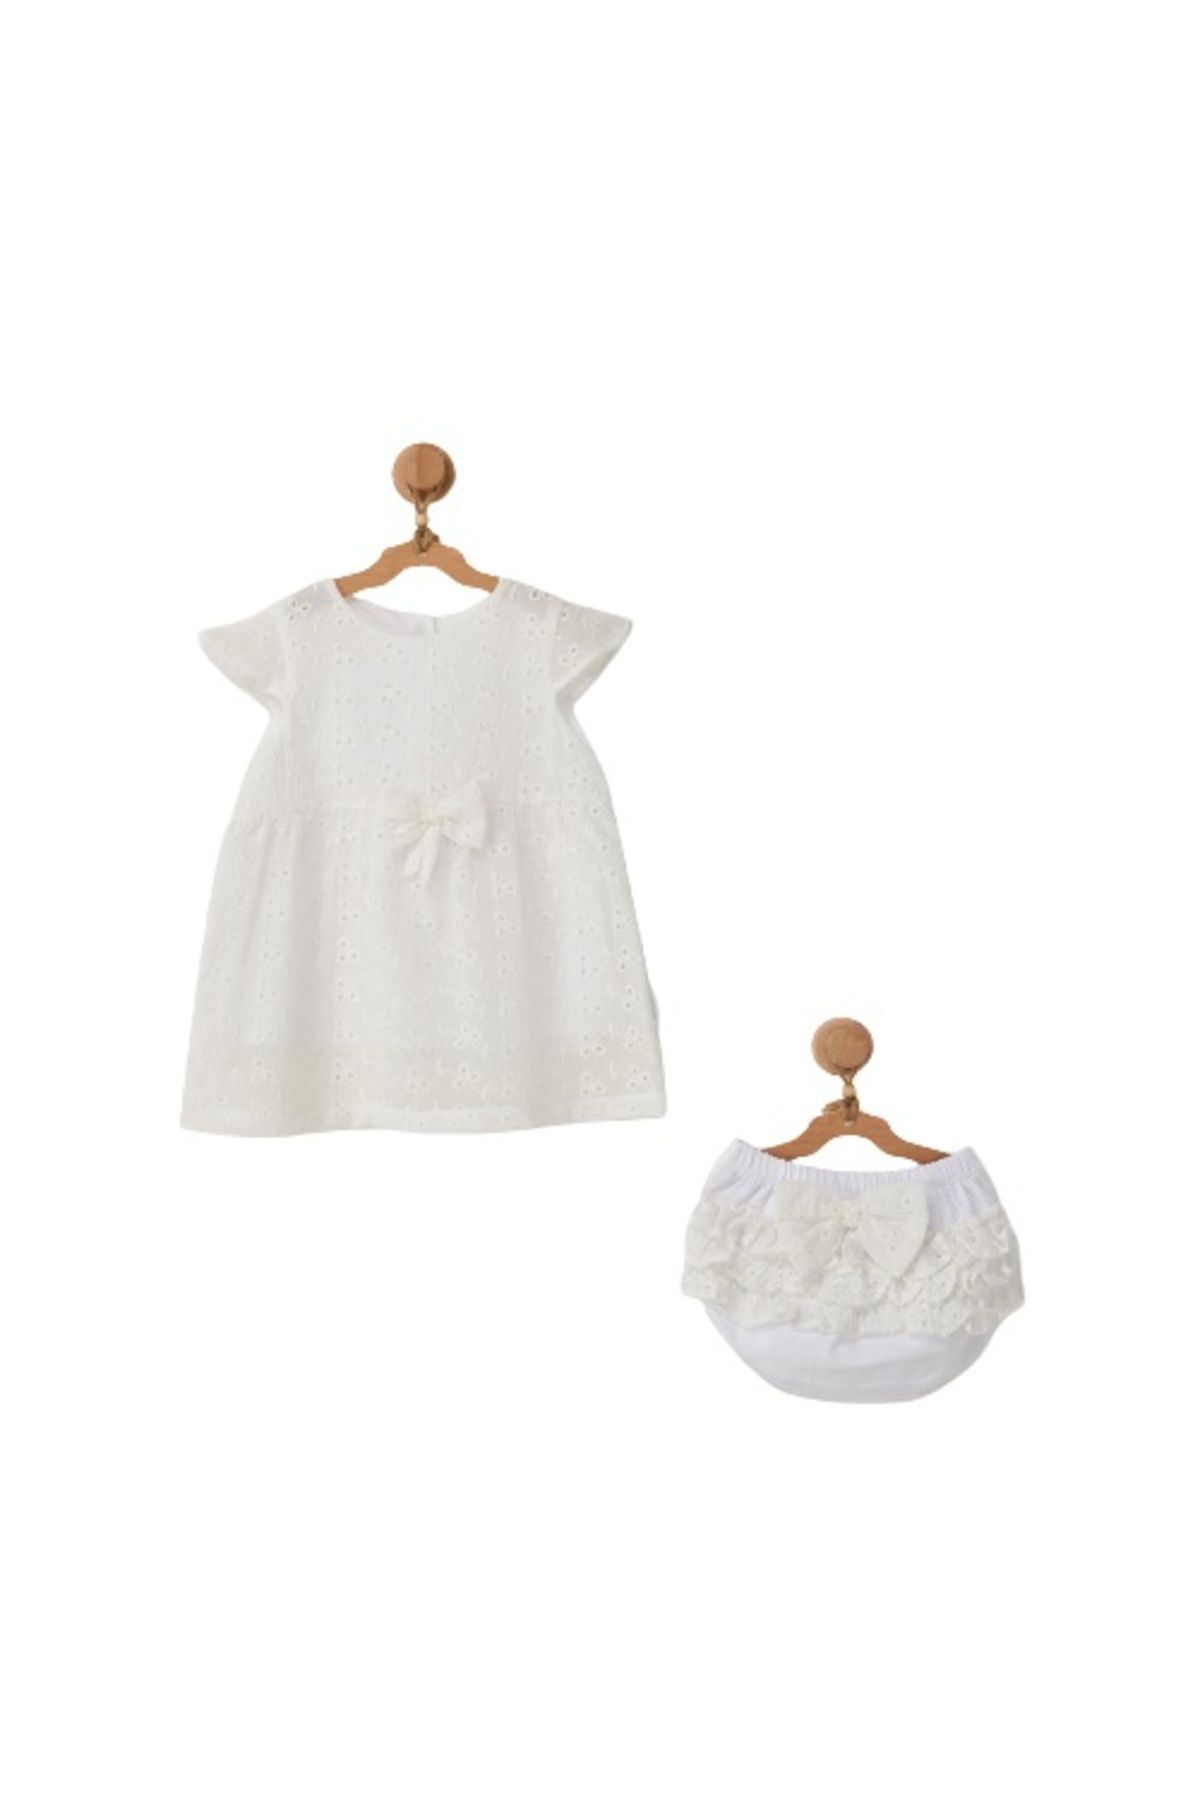 Andy Wawa Ac22506 Floral Street Underpant Bebek Elbise Takım White